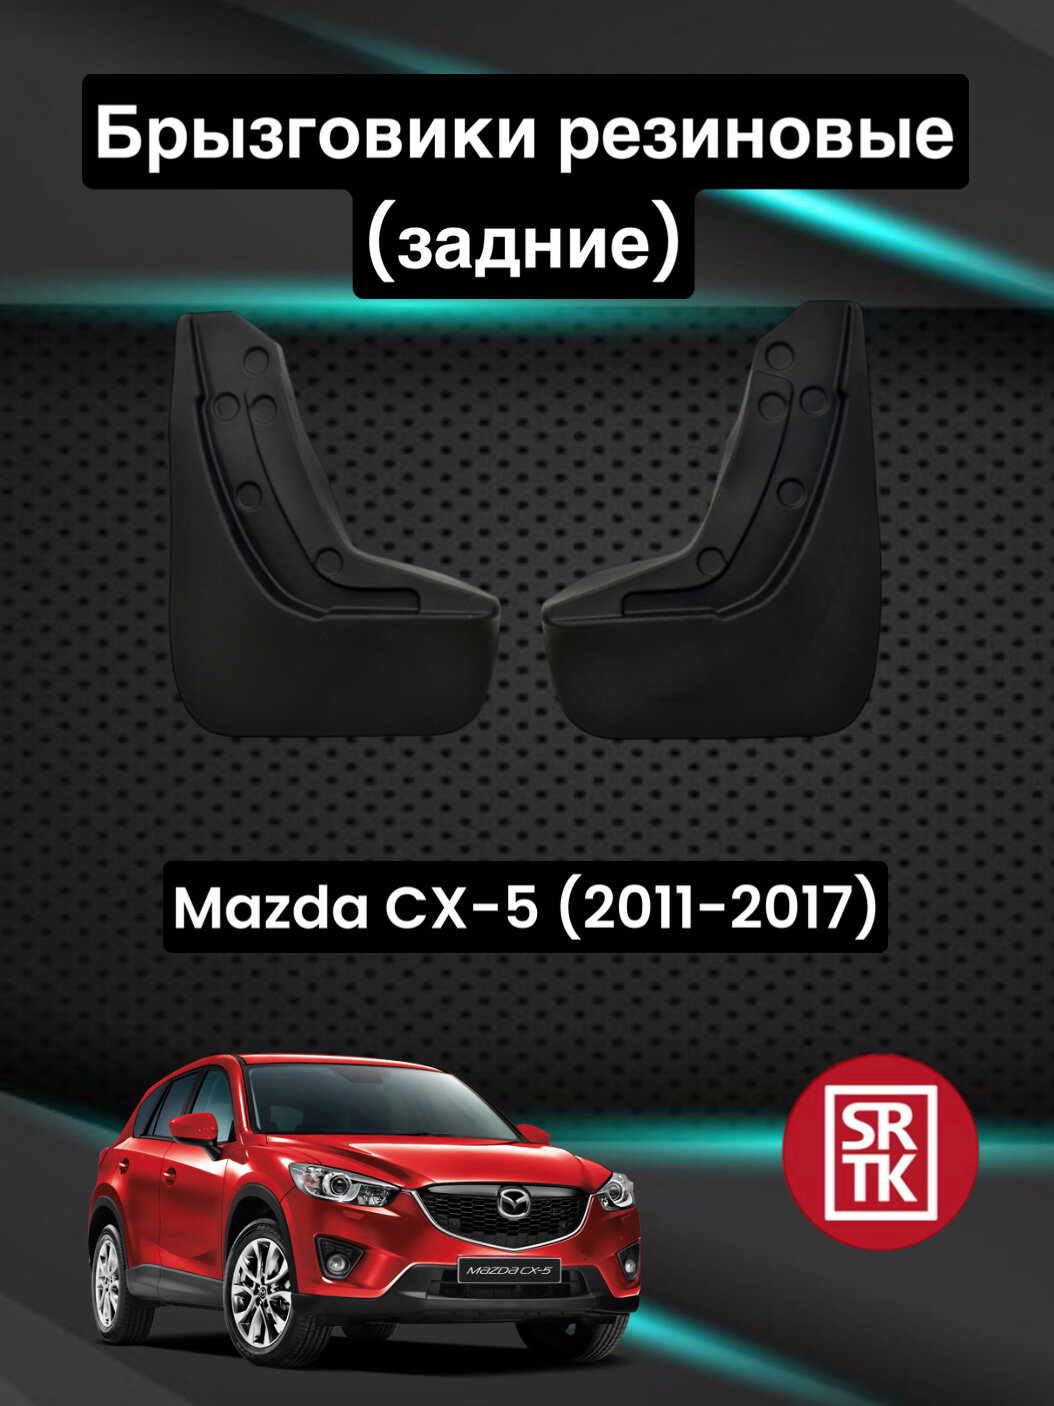 Брызговики резиновые для Мазда СХ-5/Mazda CX-5 (2011-2017) SRTK, задние